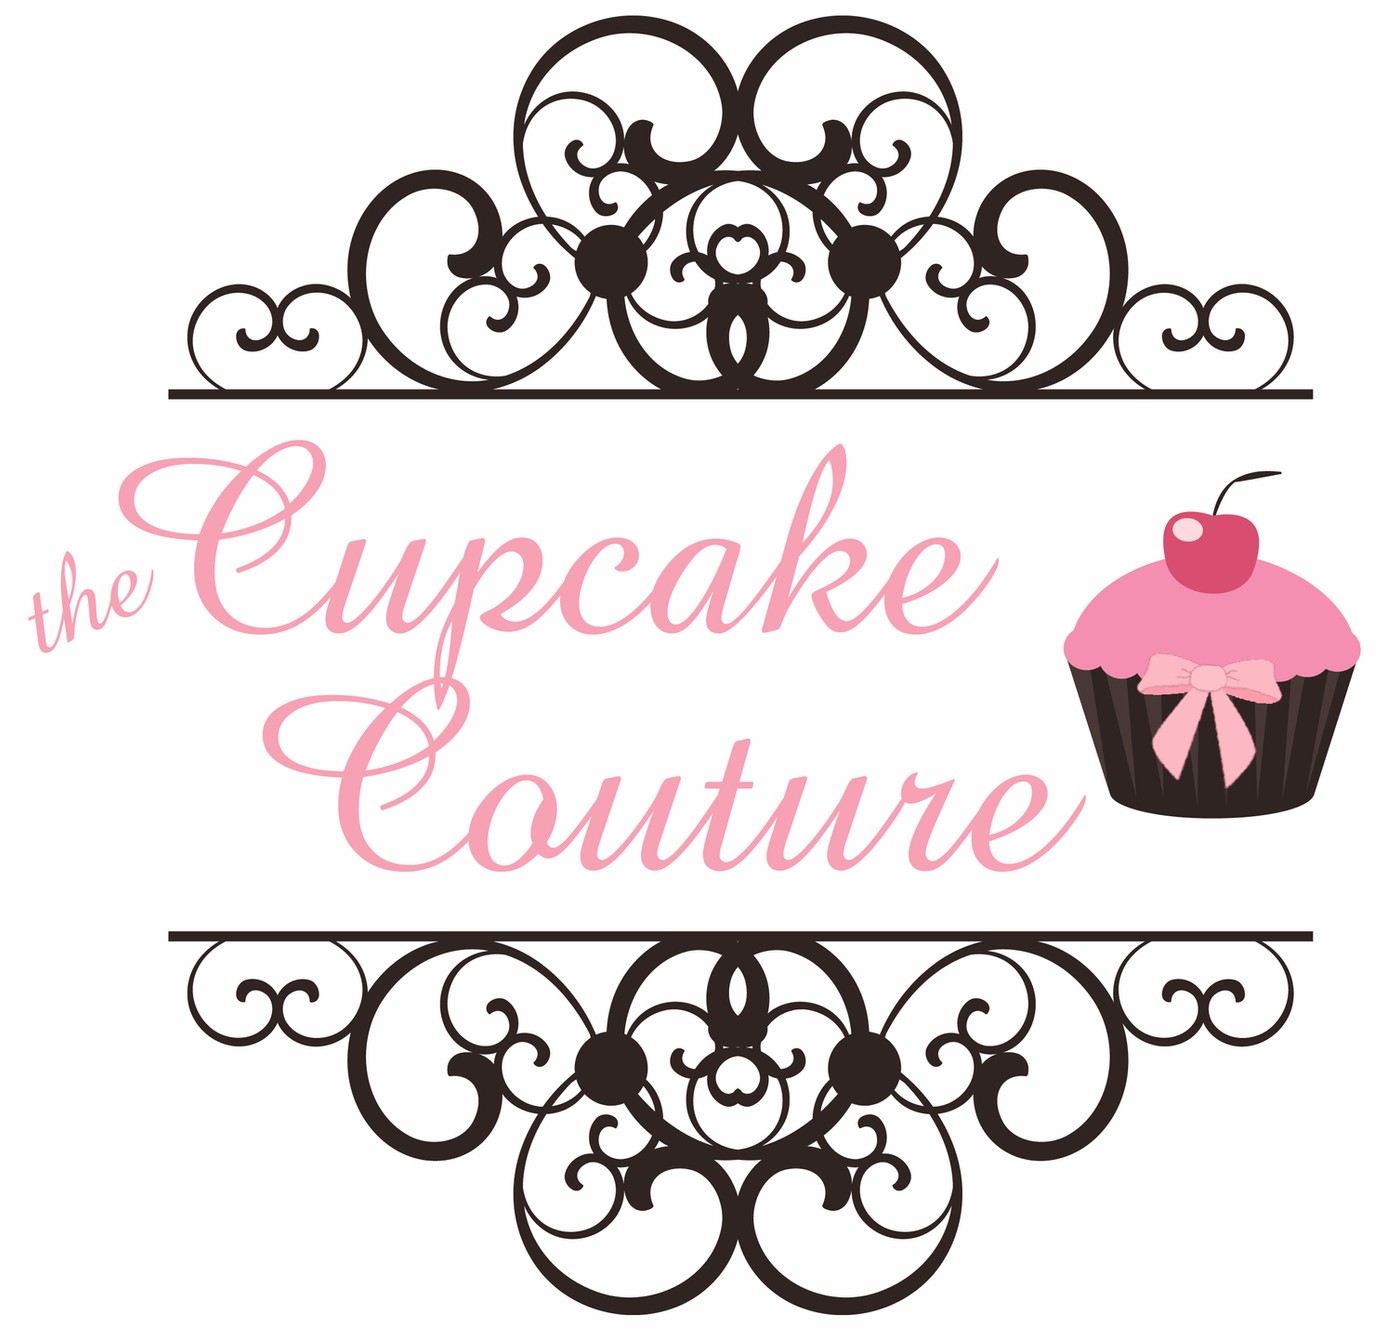 the cupcake couture Logo.jpg